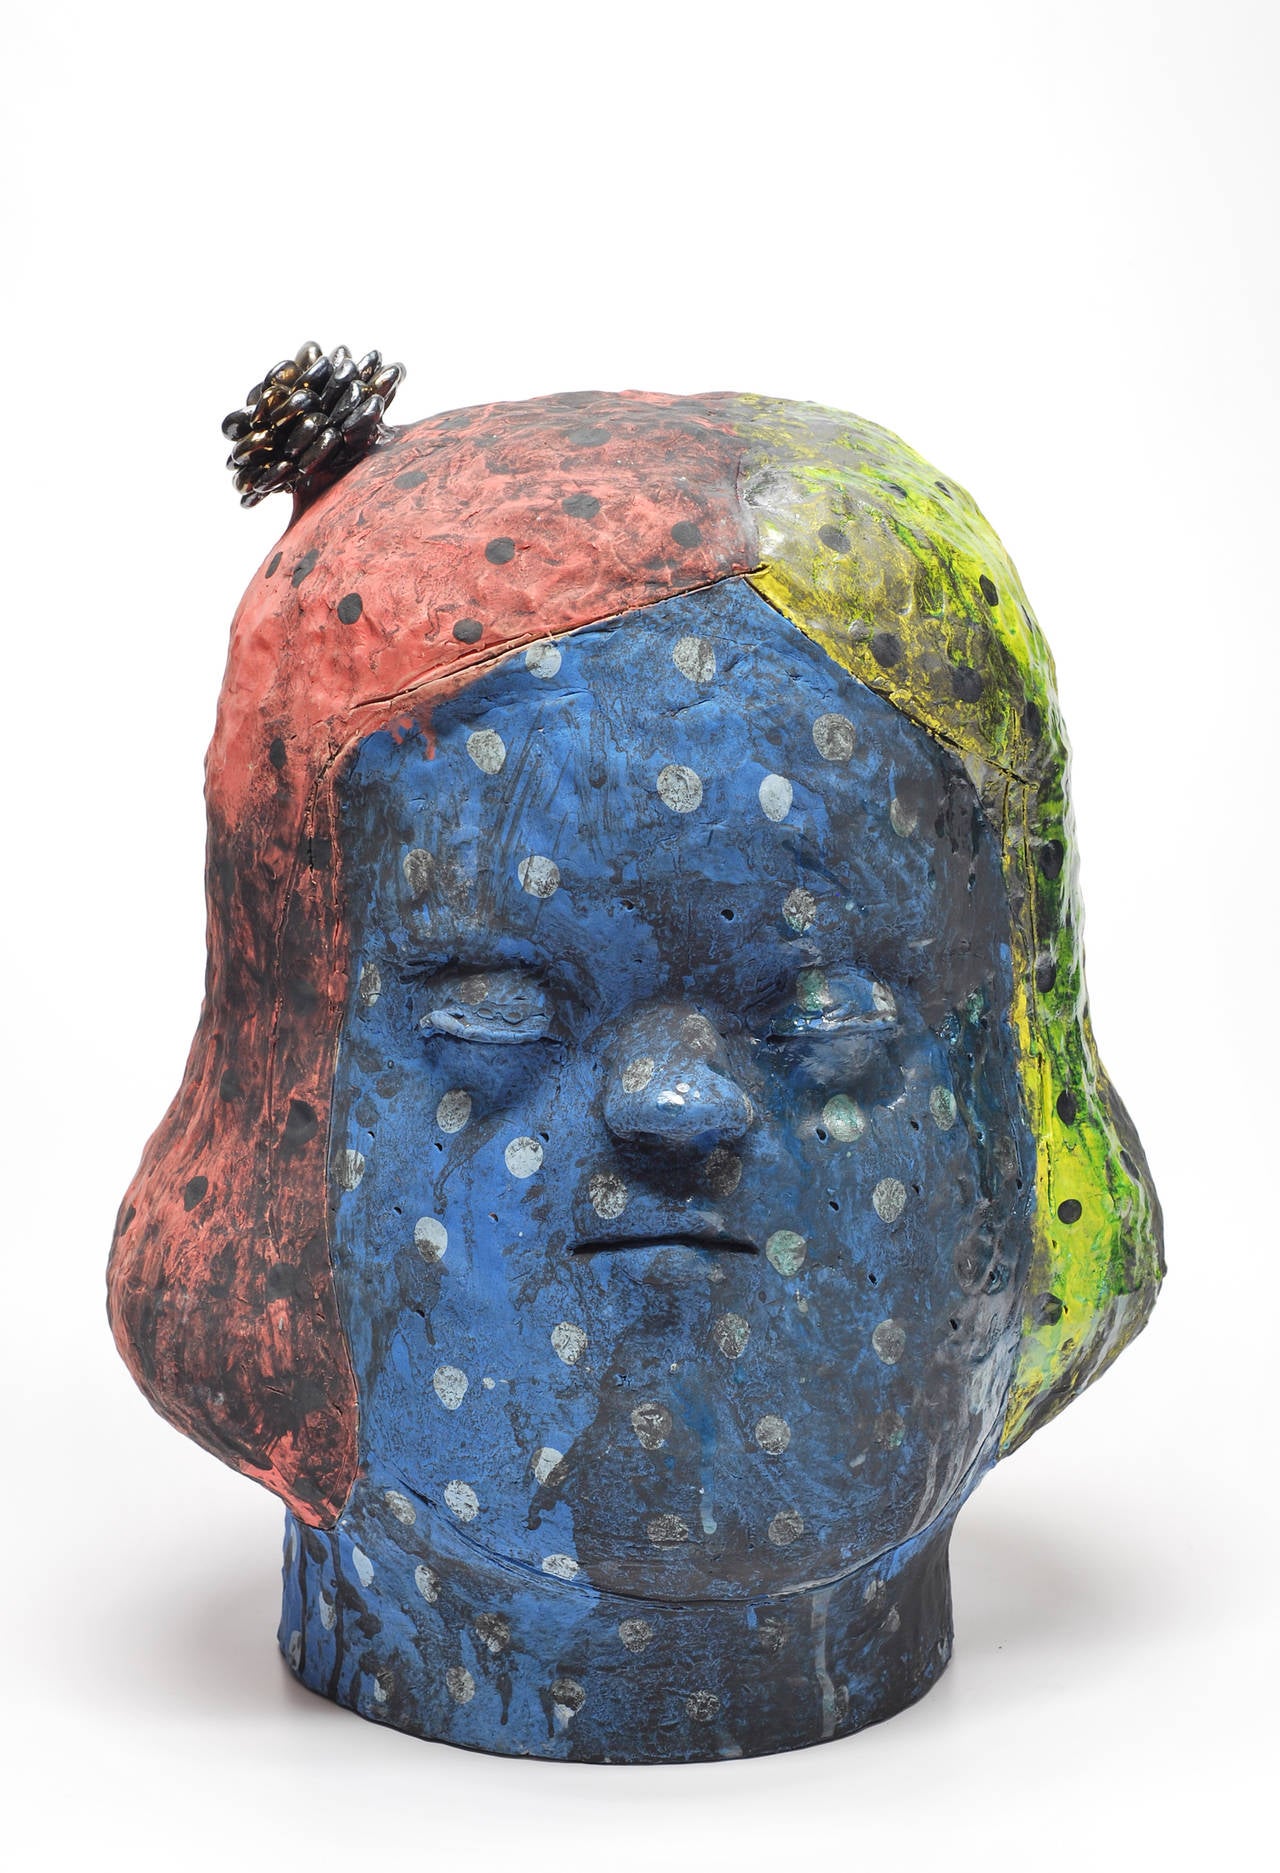 Kensuke Yamada Figurative Sculpture - "Head (Blue Girl)"